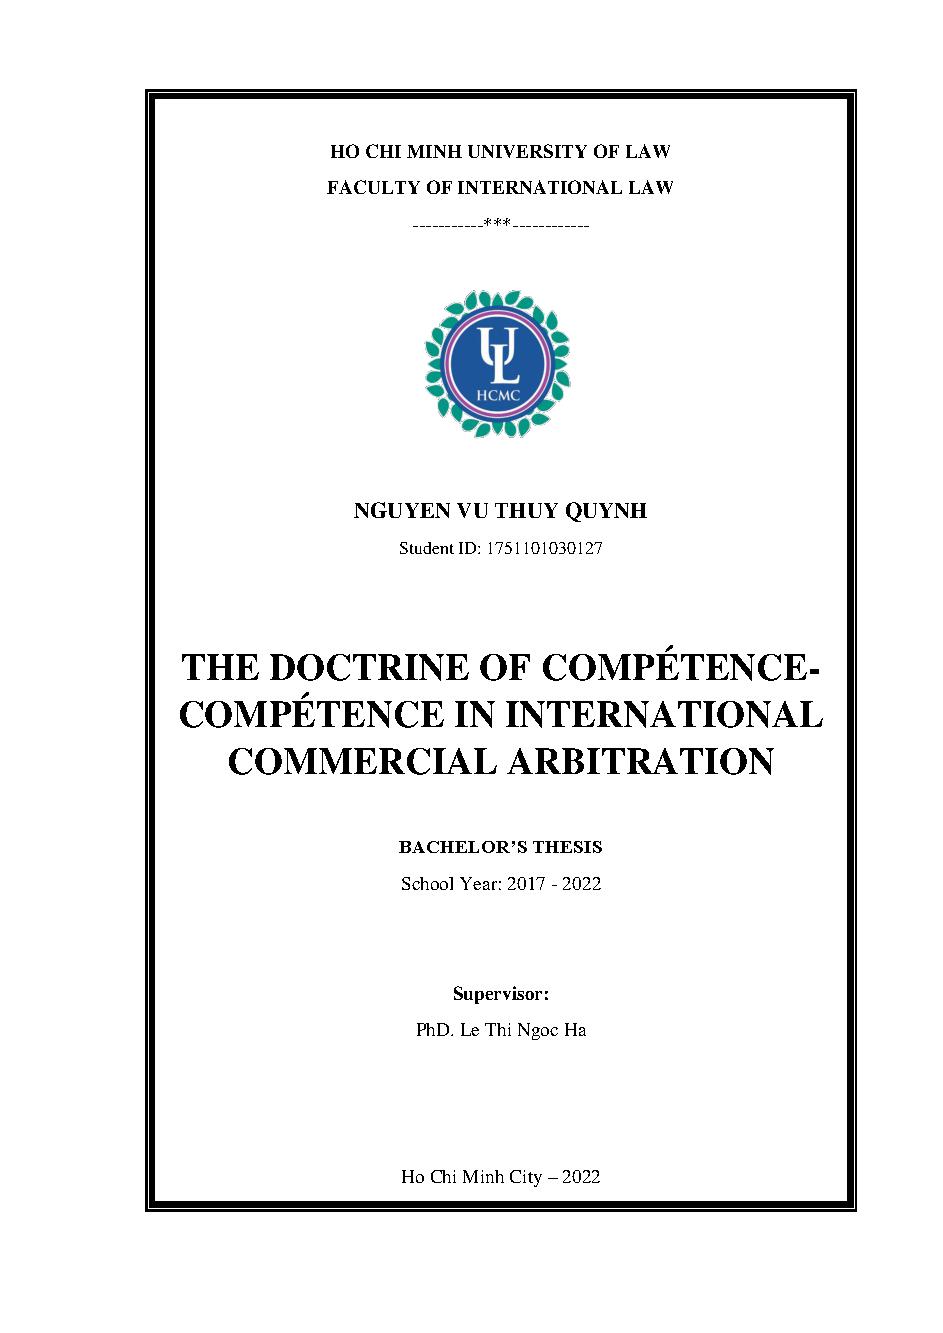 The Doctrine Of Compétence - Compétence In International Commercial Arbitration